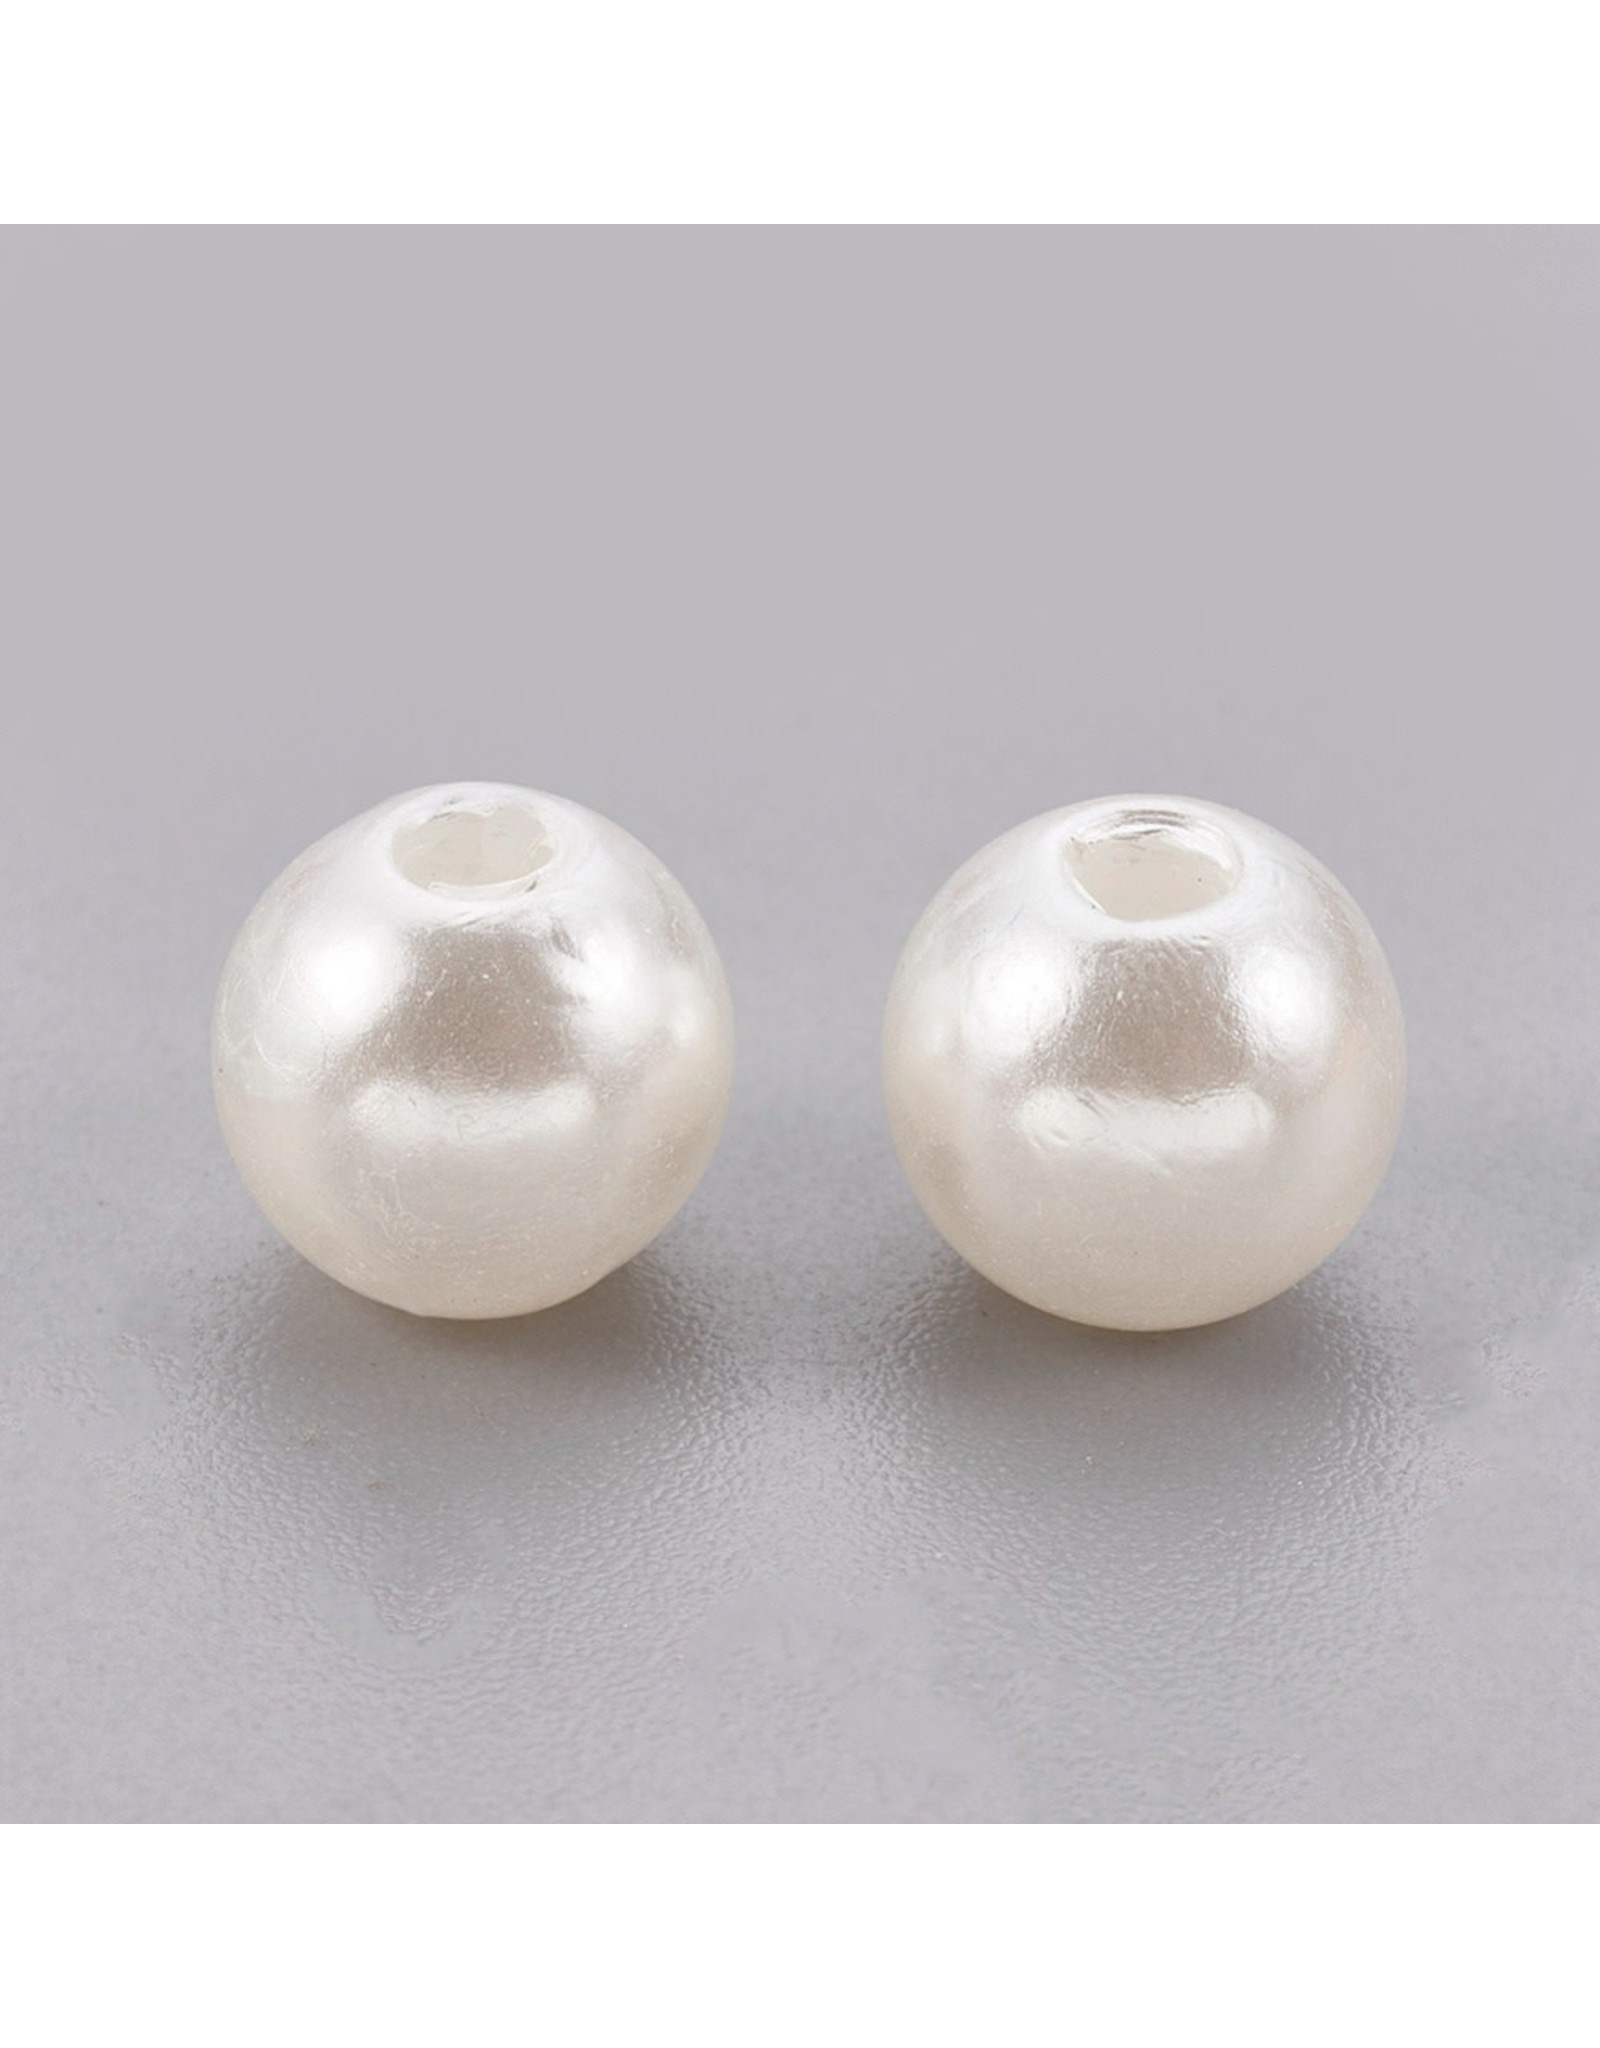 Craft Pearls  12mm Cream   x25